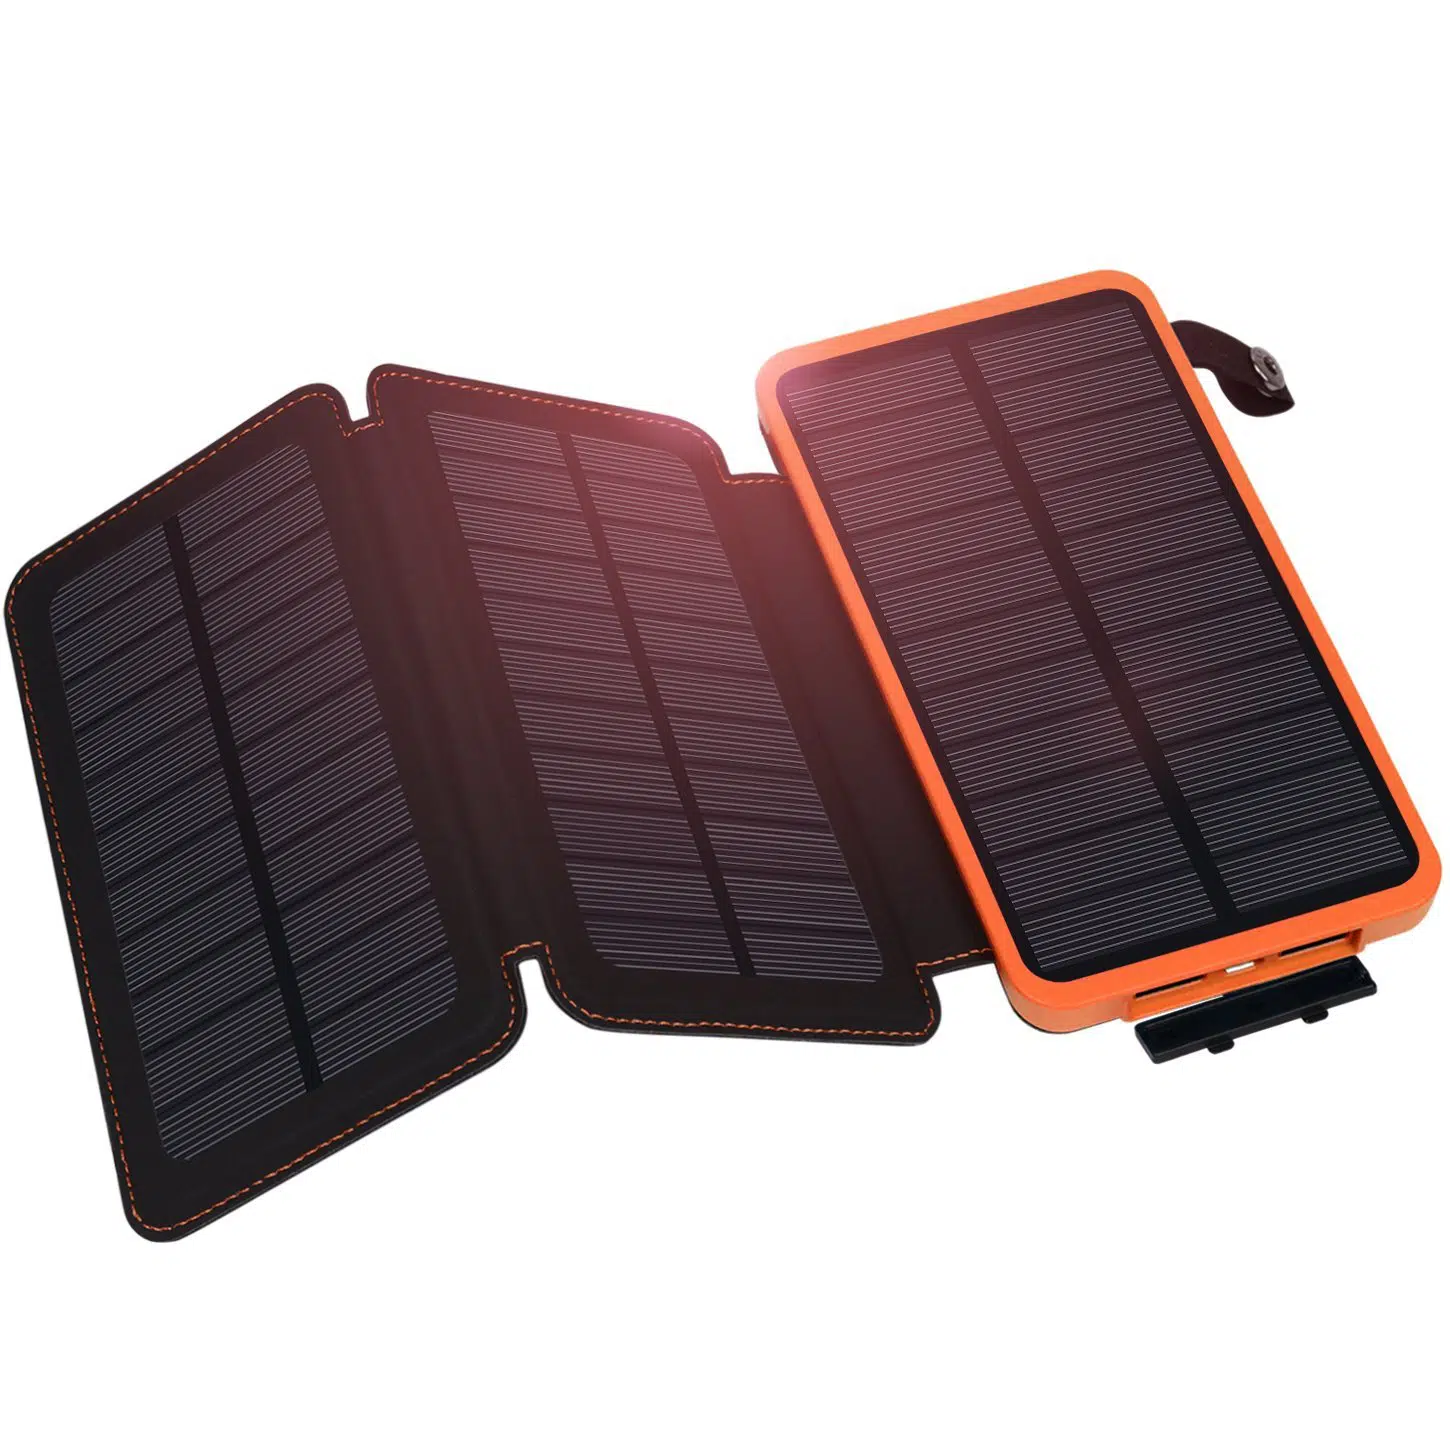 Hiluckey Waterproof Solar Power Bank